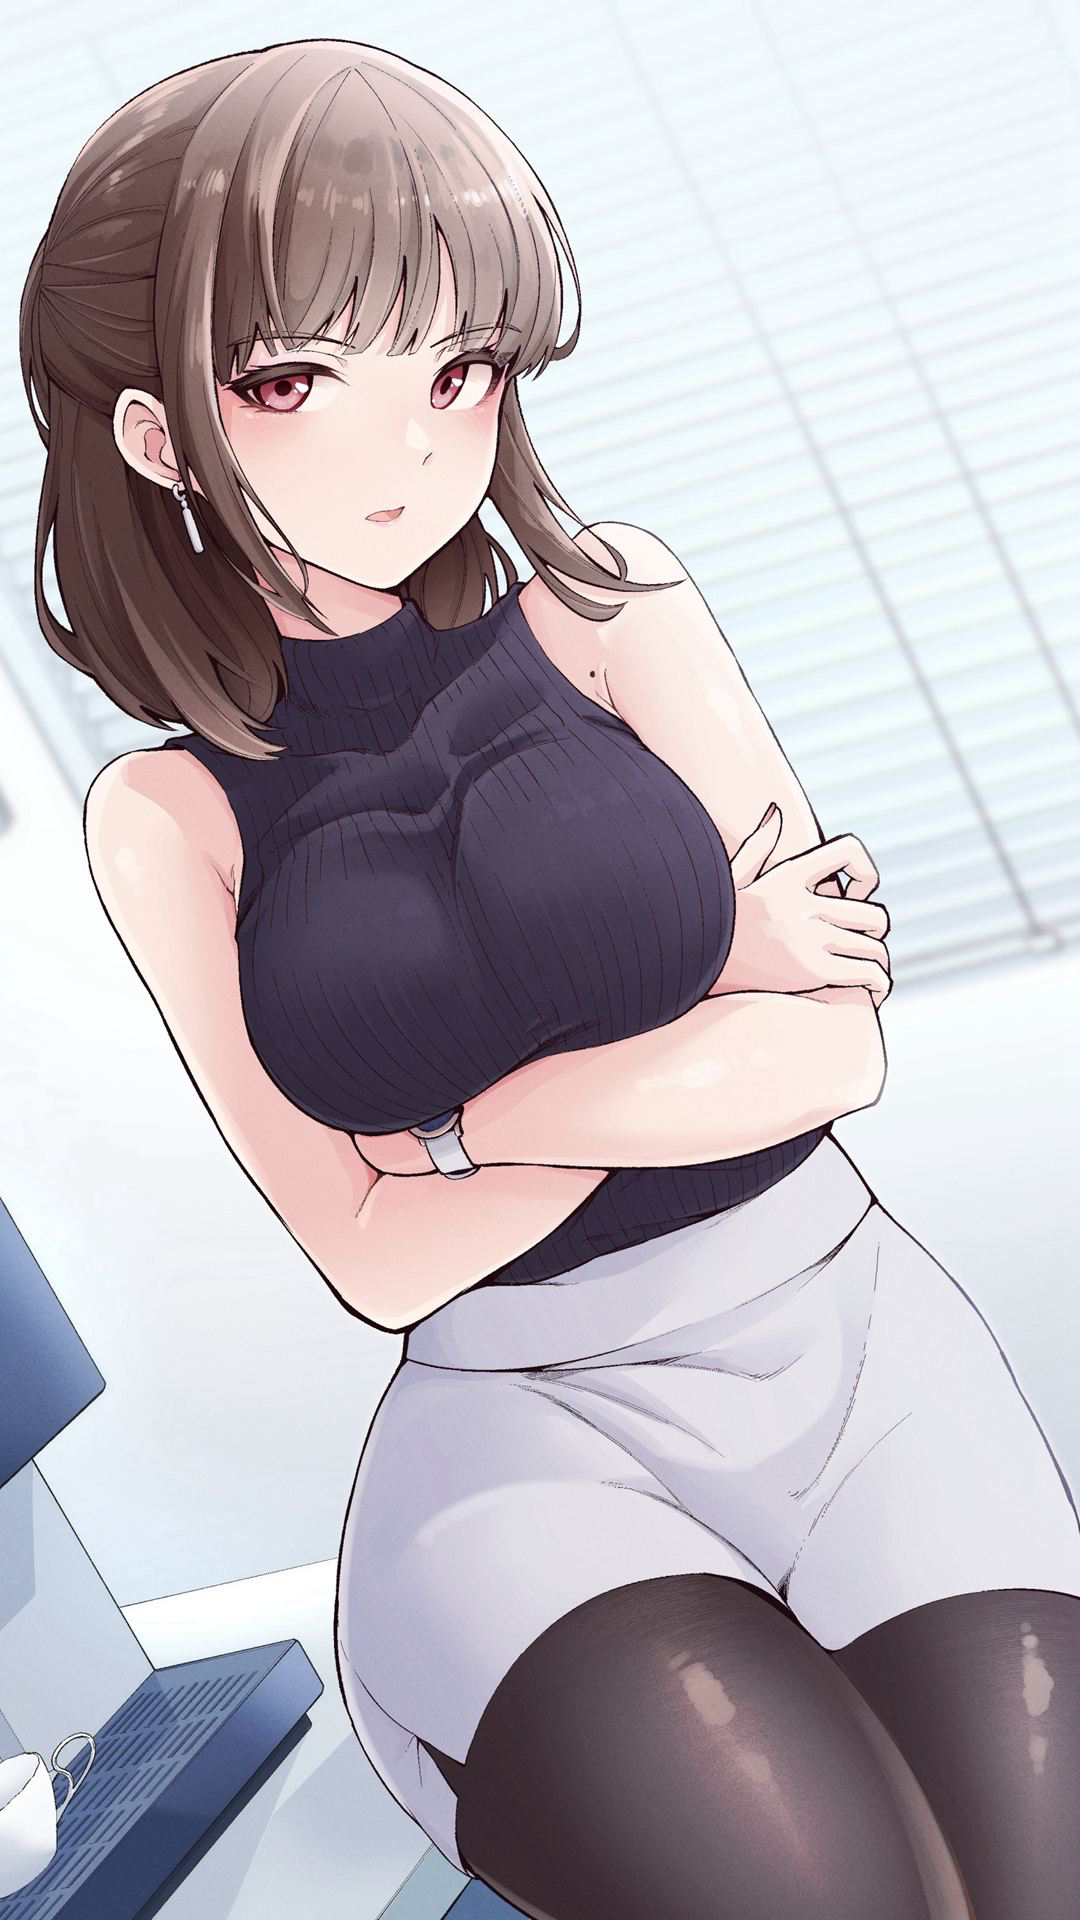 Anime 1080x1920 anime anime girls skirt moles bare shoulders black top sleeveless shirt sleeveless top sleeveless arms crossed brunette sitting pantyhose blushing red eyes